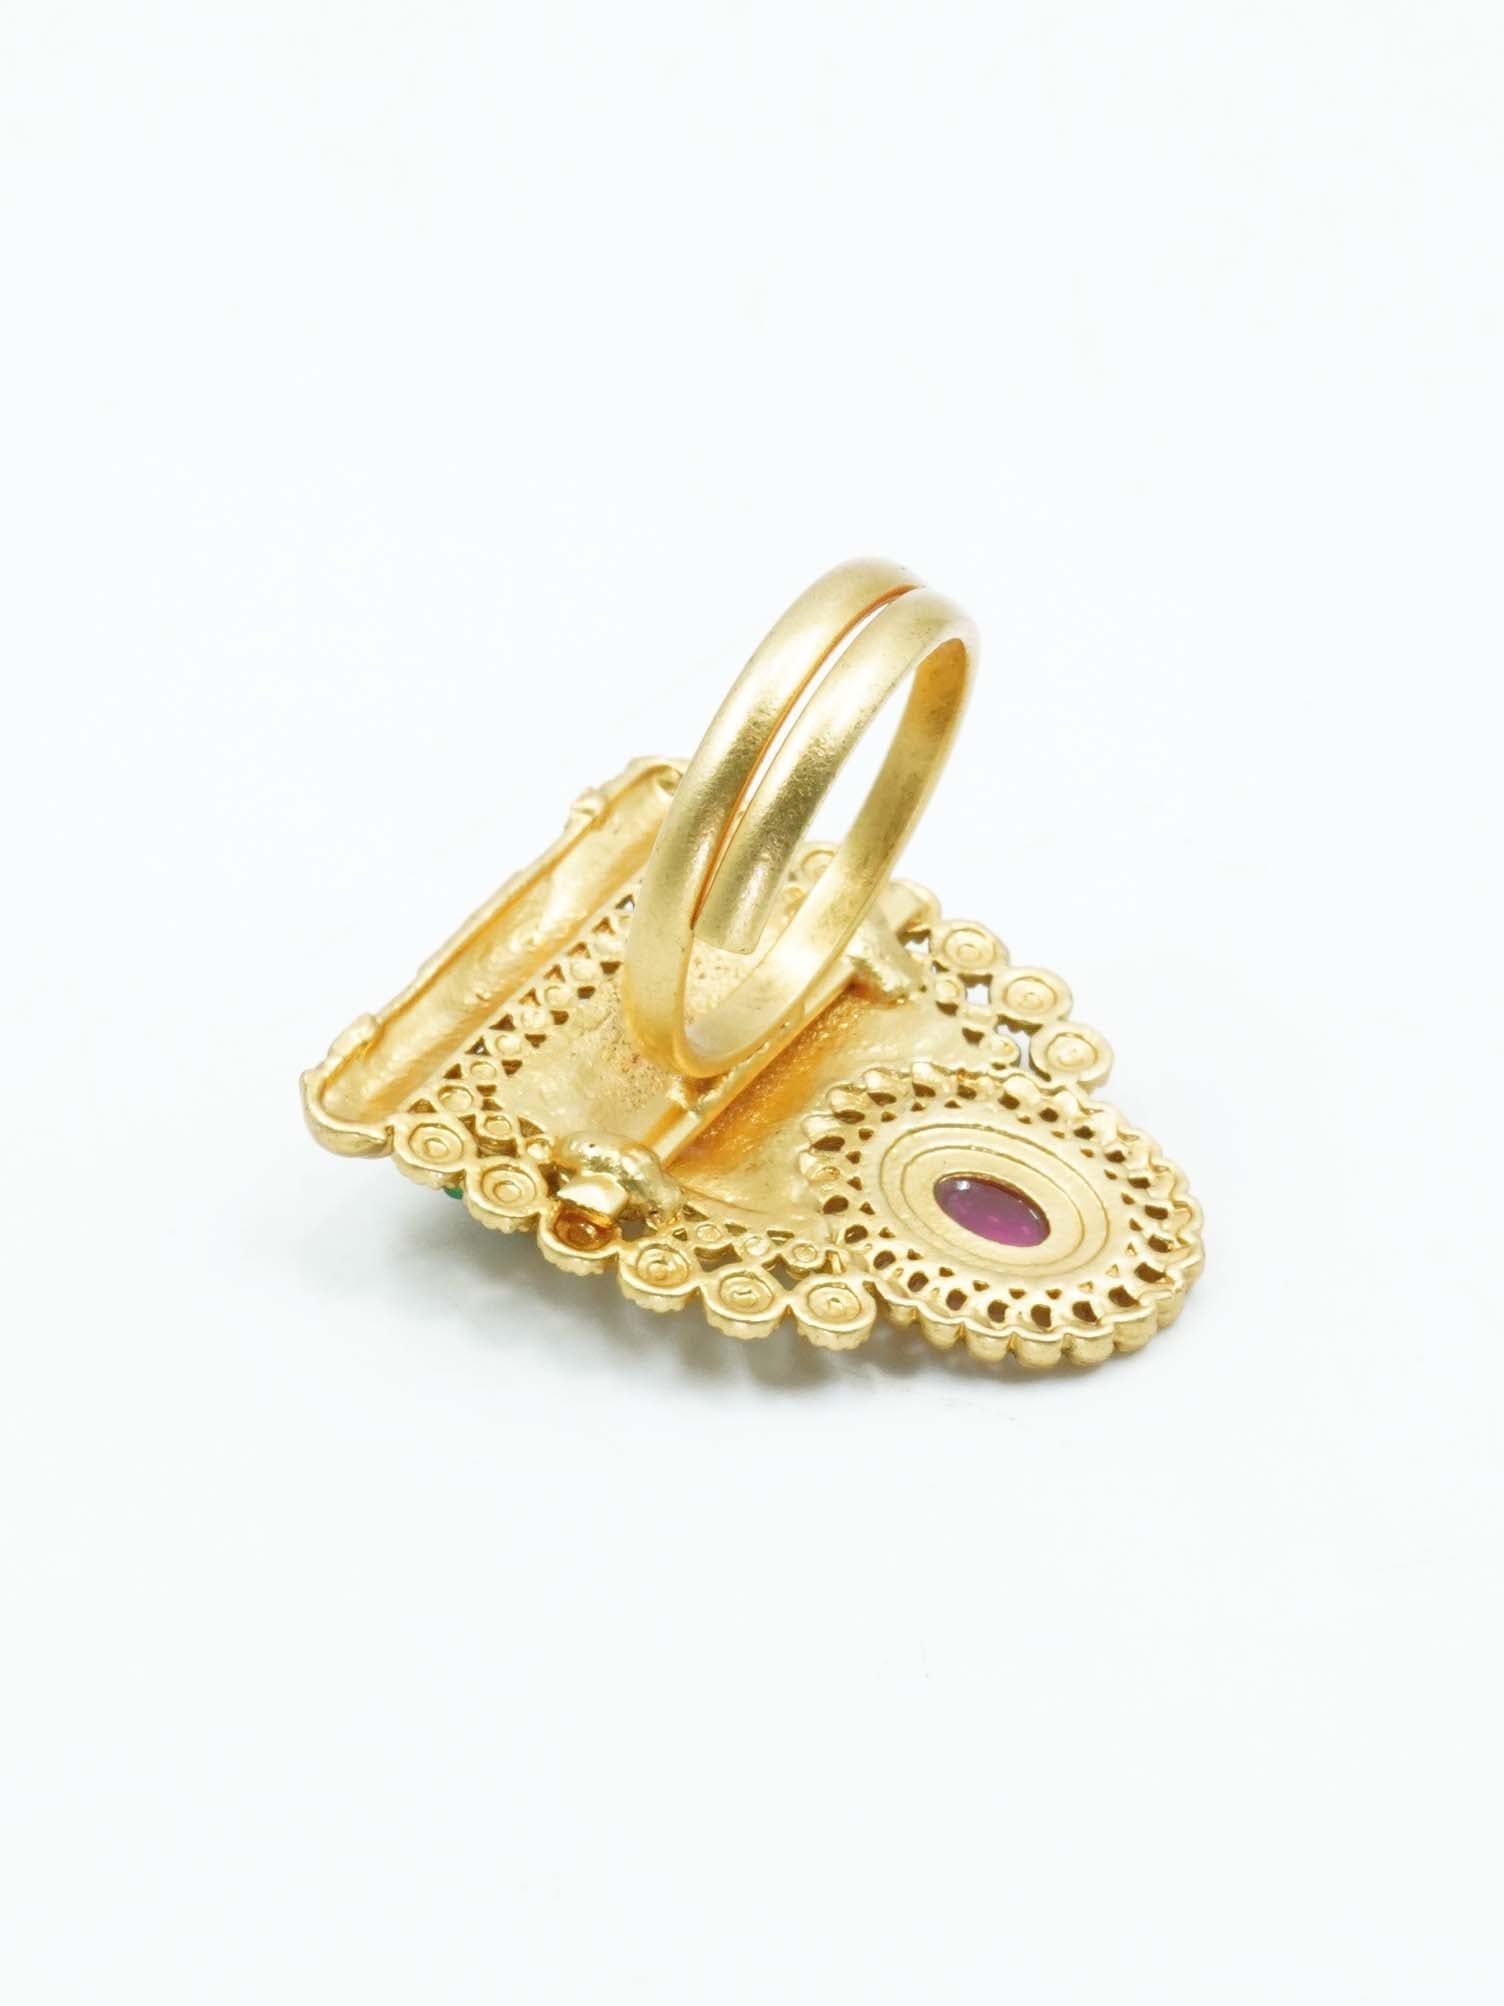 Antique Gold Plated Adjustable Size Designer Finger ring with Stones 11052N